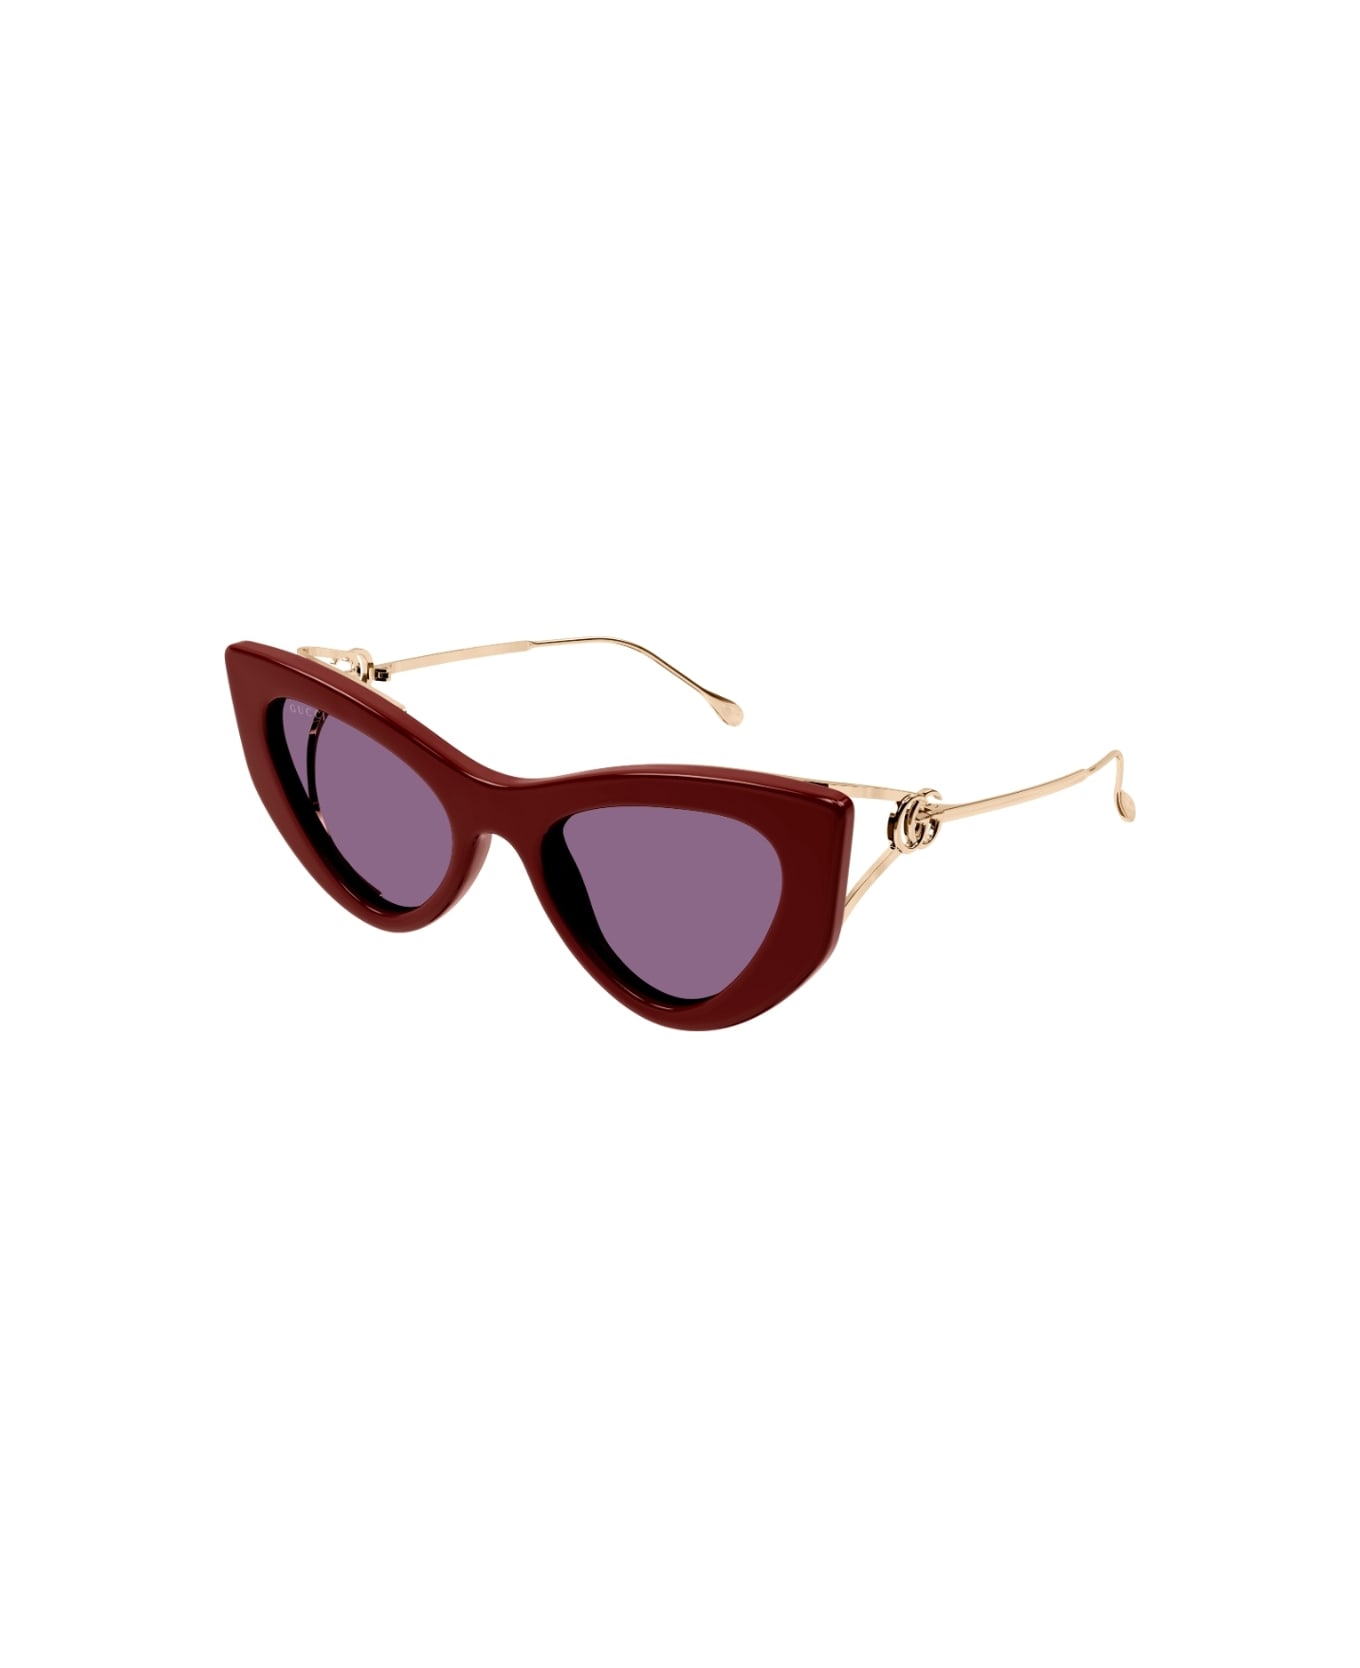 Gucci Eyewear GG1564S-004 Sunglasses - Burgundy e oro サングラス